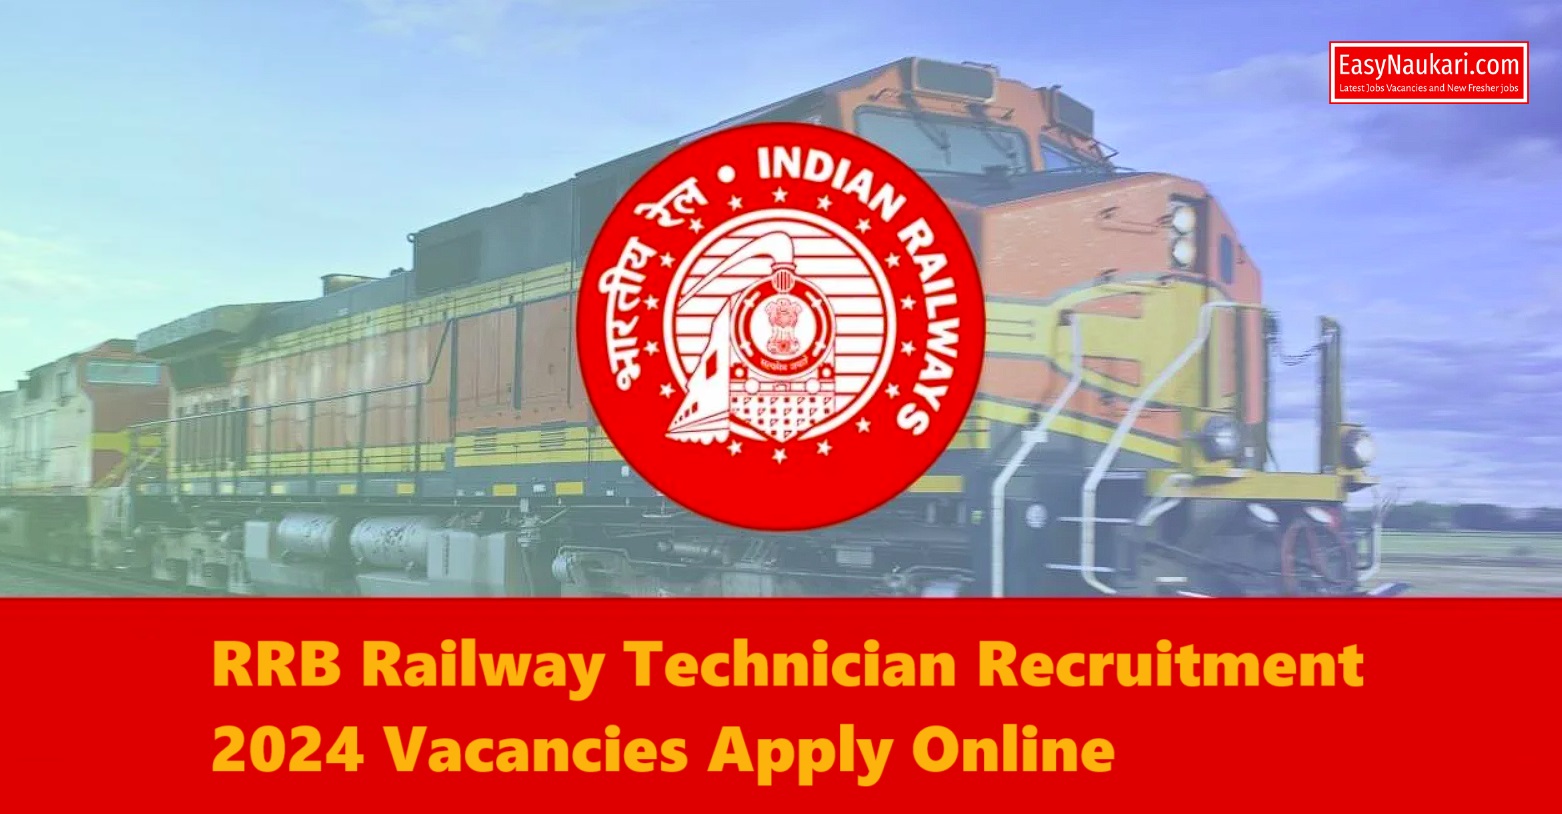 Rrb Railway Technician Recruitment 2024 Vacancies Apply Online